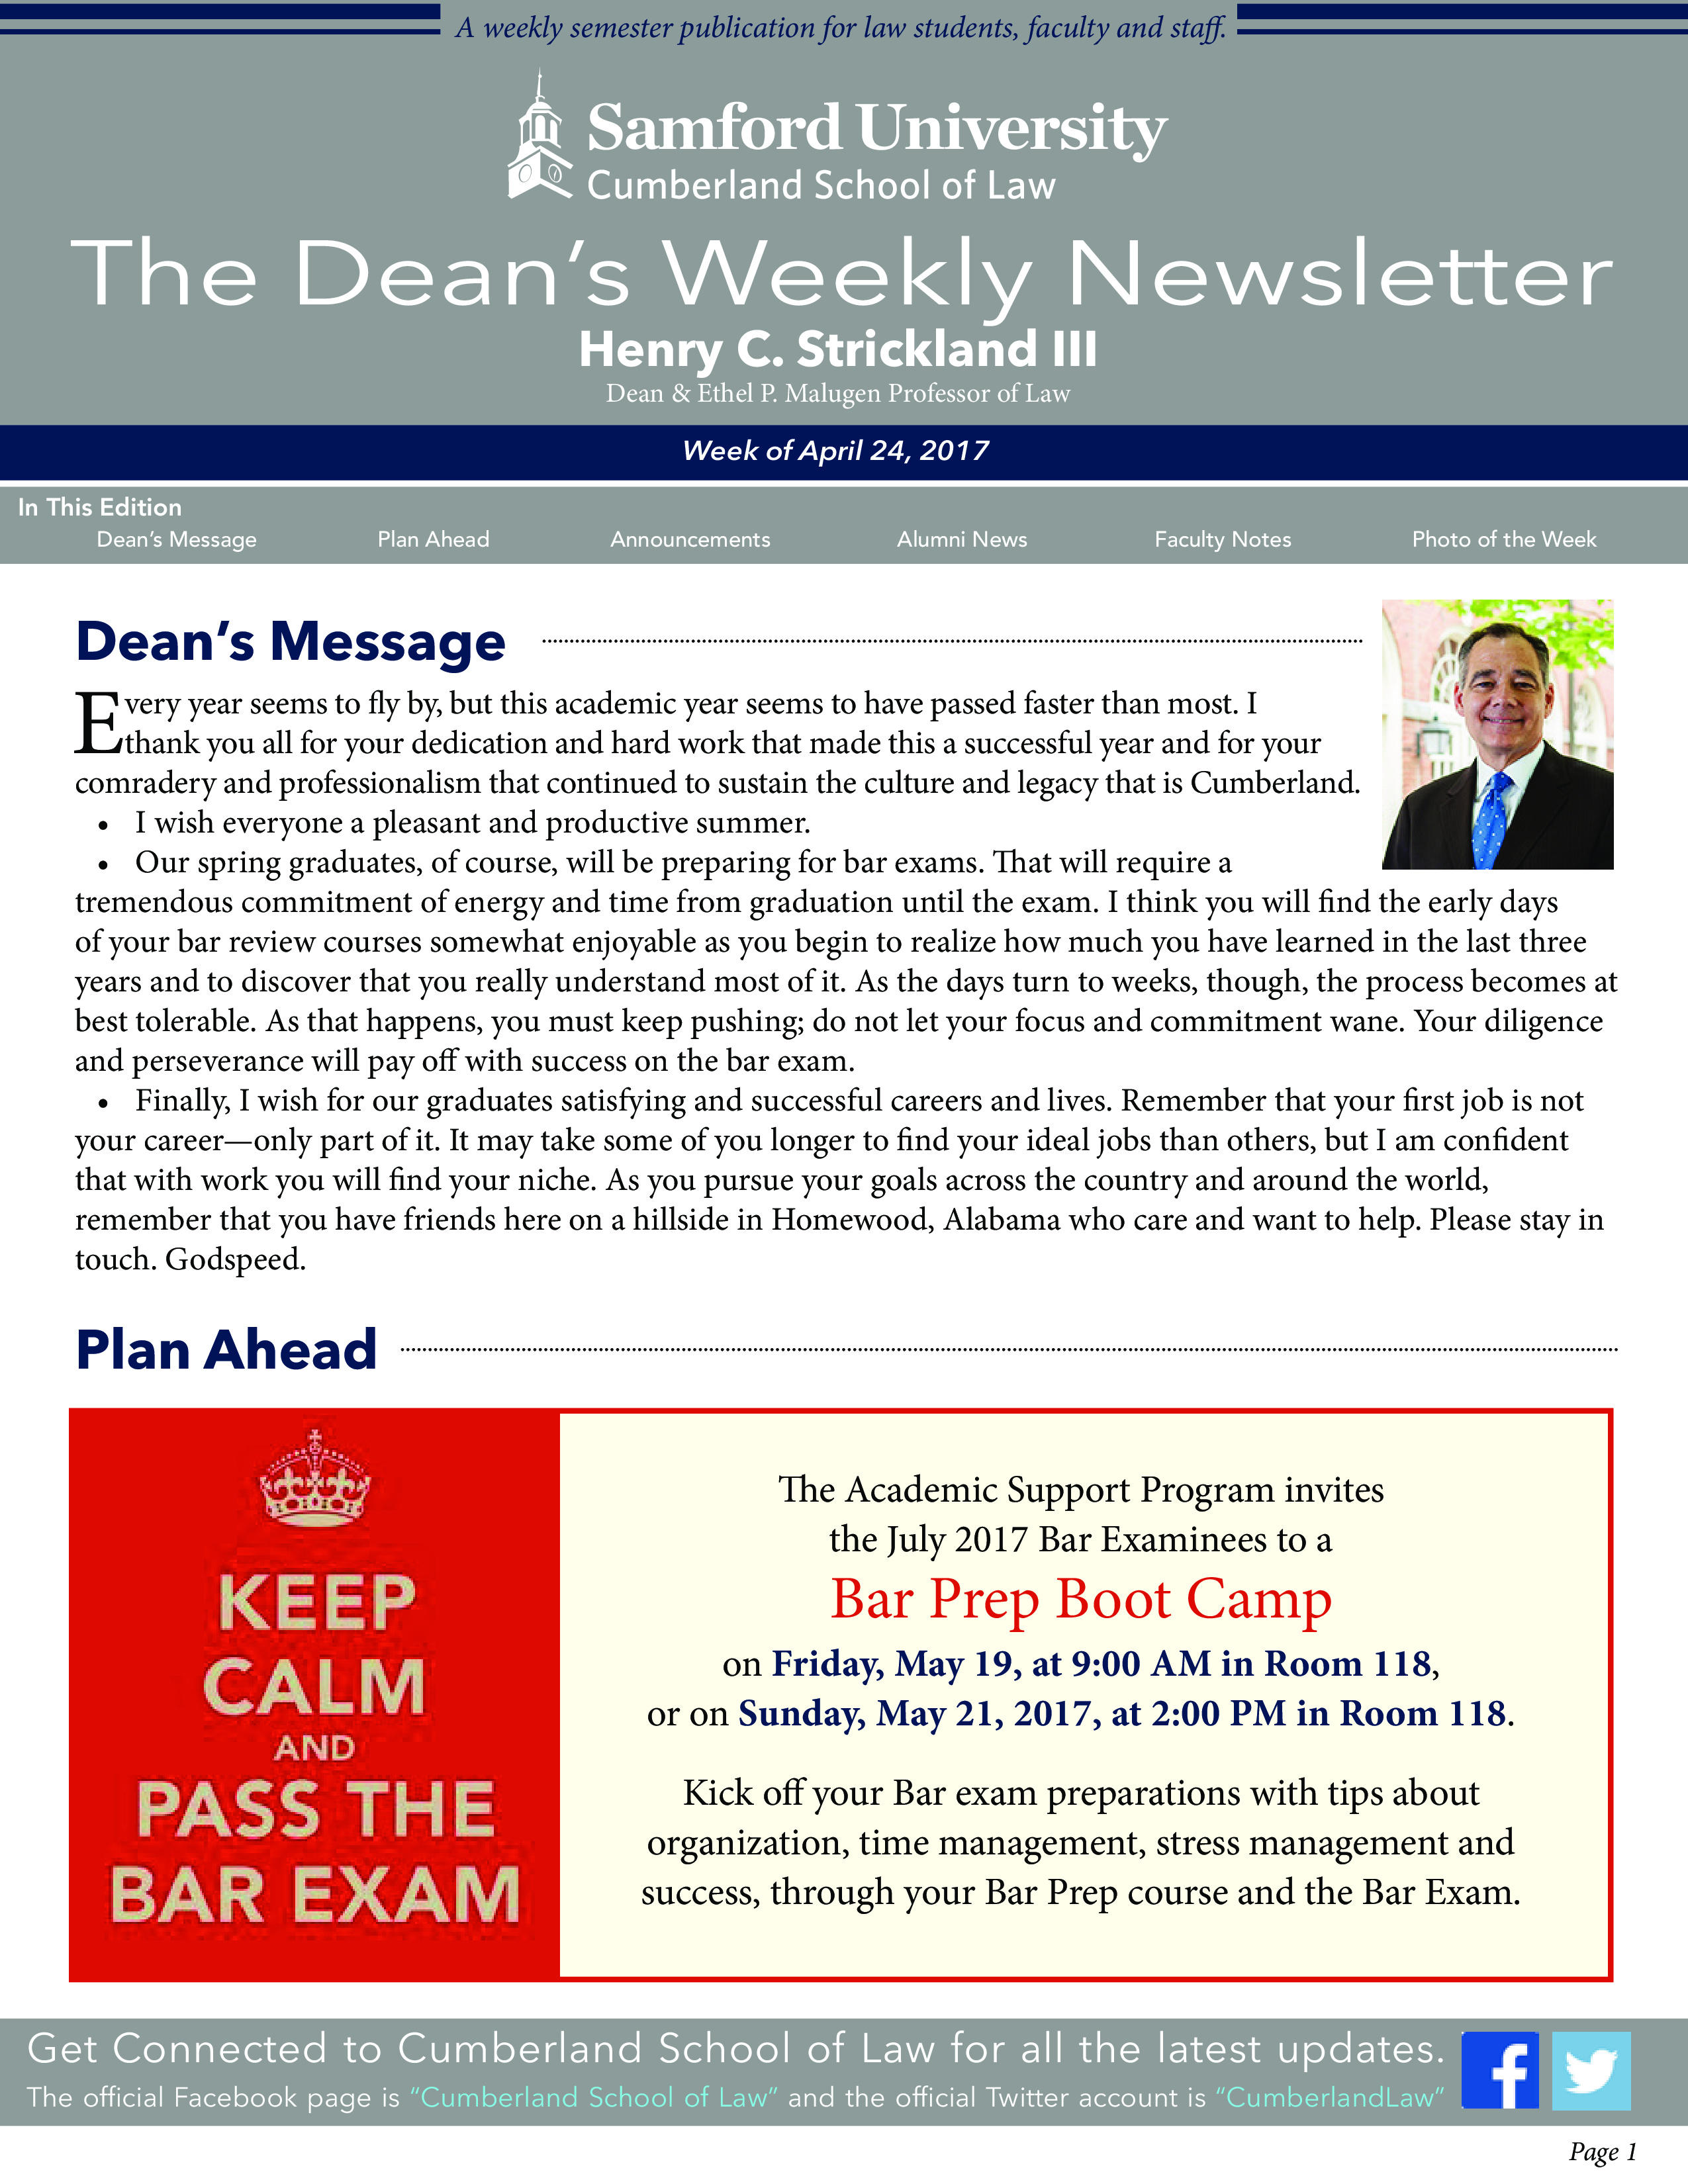 Weekly University Newsletter Example main image